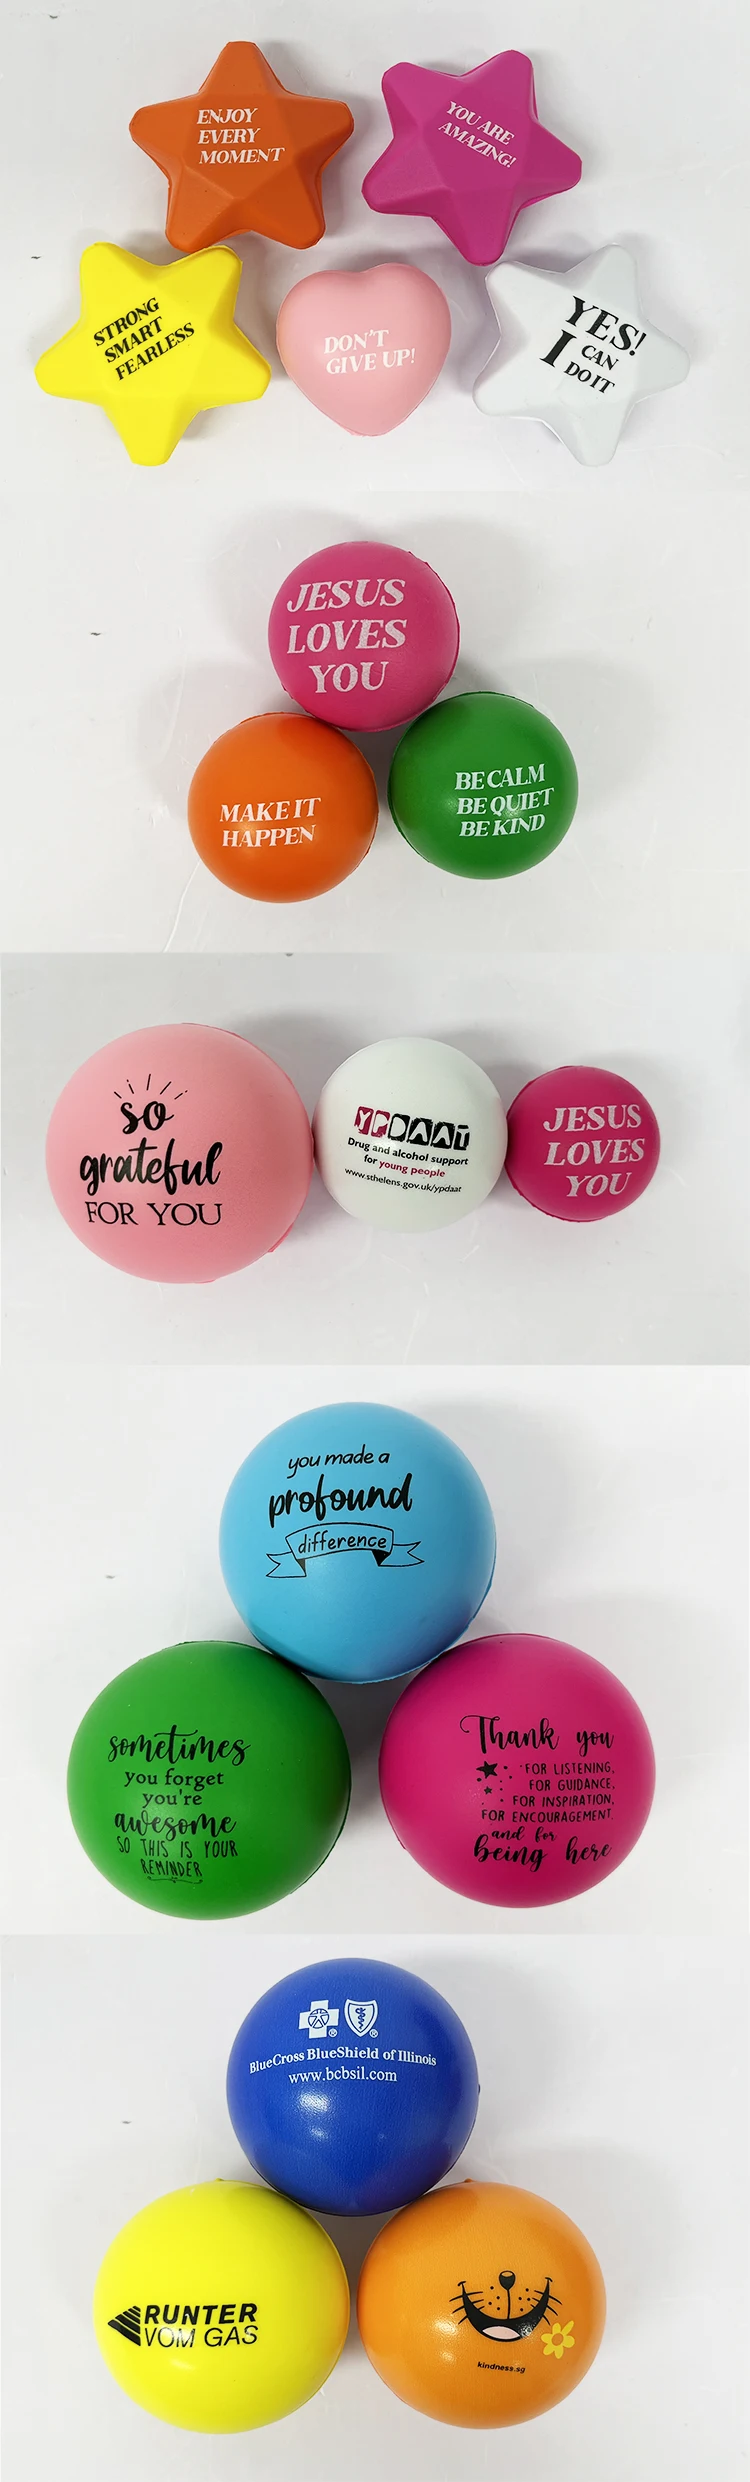 Promotional Squeeze Pu Toy Anti-stress Shape Stressball Customized With Logo For Kids Foam Soft Relief Stress Ball Custom Logo